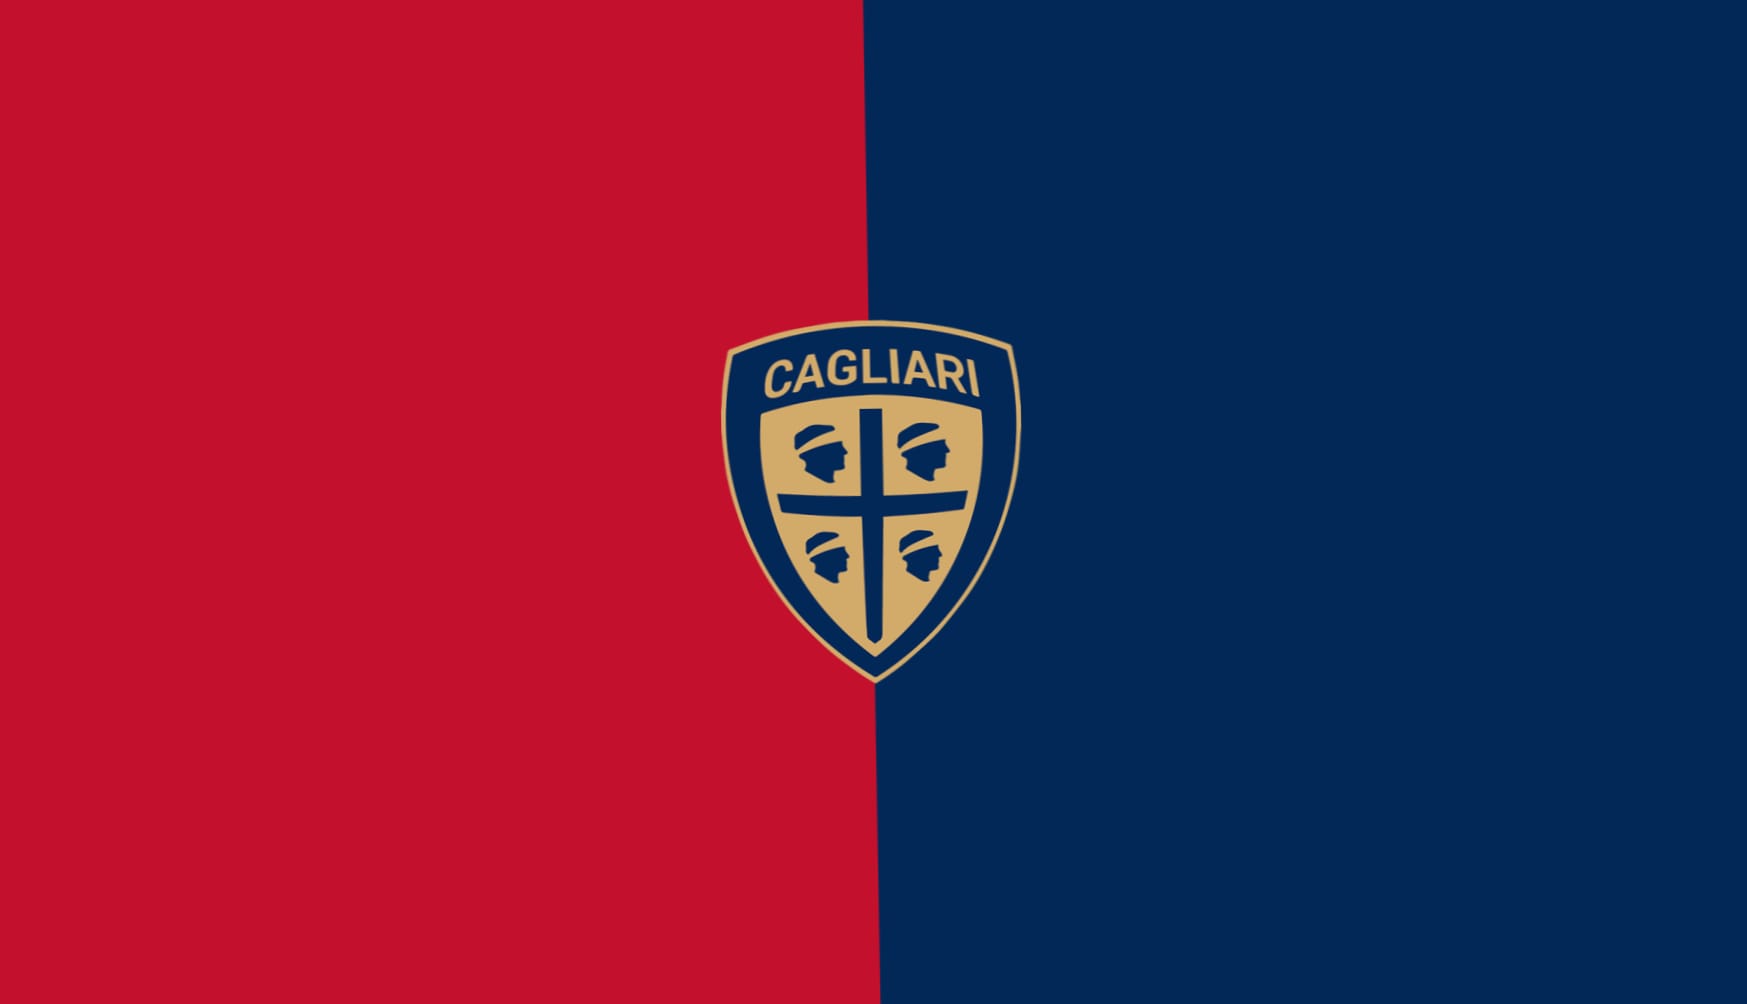 Cagliari Calcio at 1024 x 1024 iPad size wallpapers HD quality